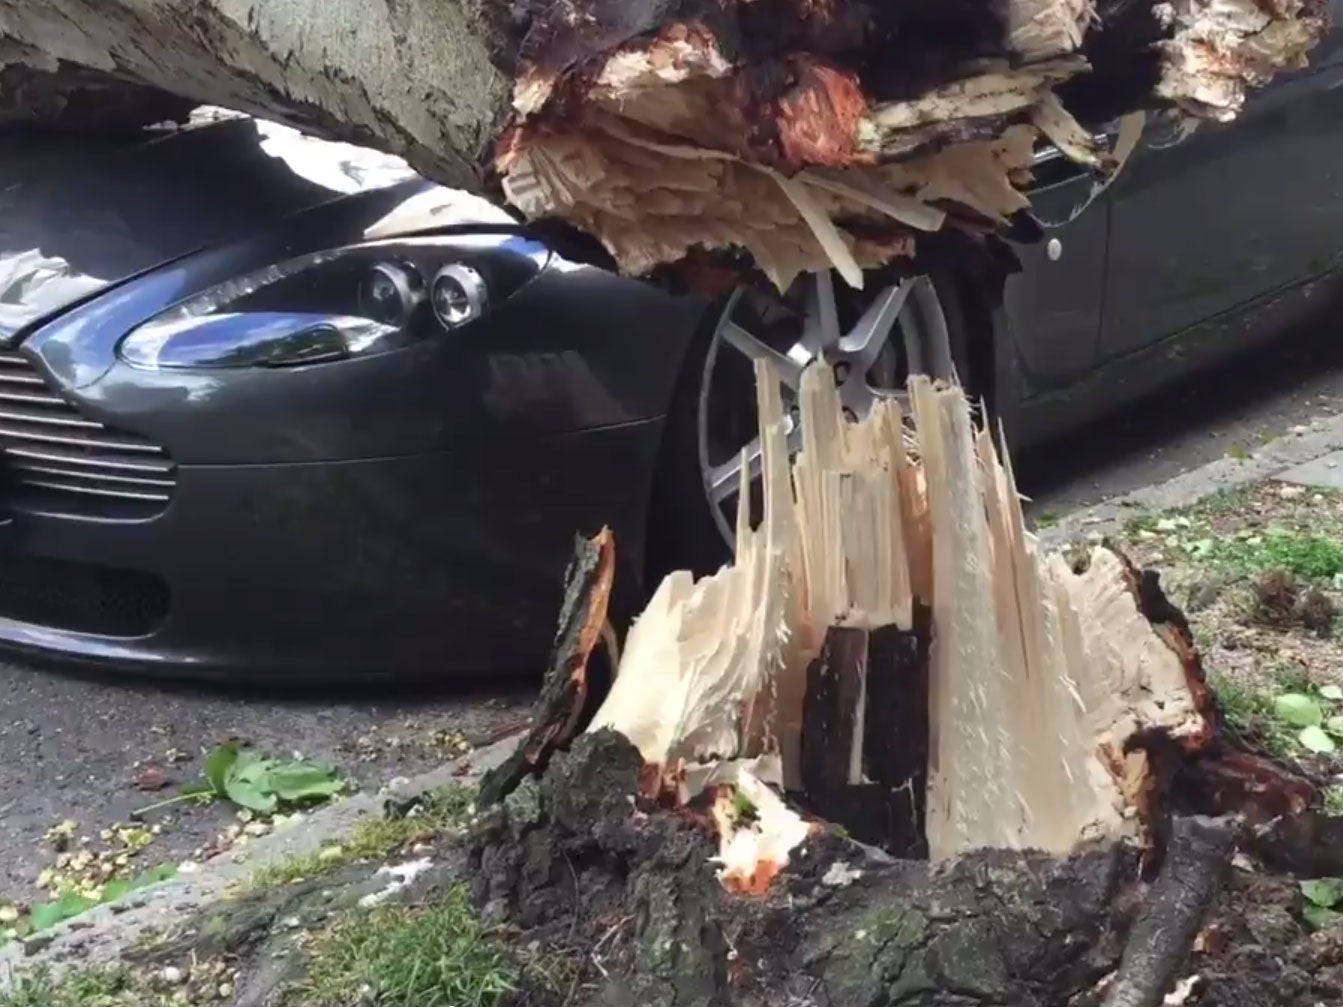 The 50ft tree had fallen straight across the car's bonnet